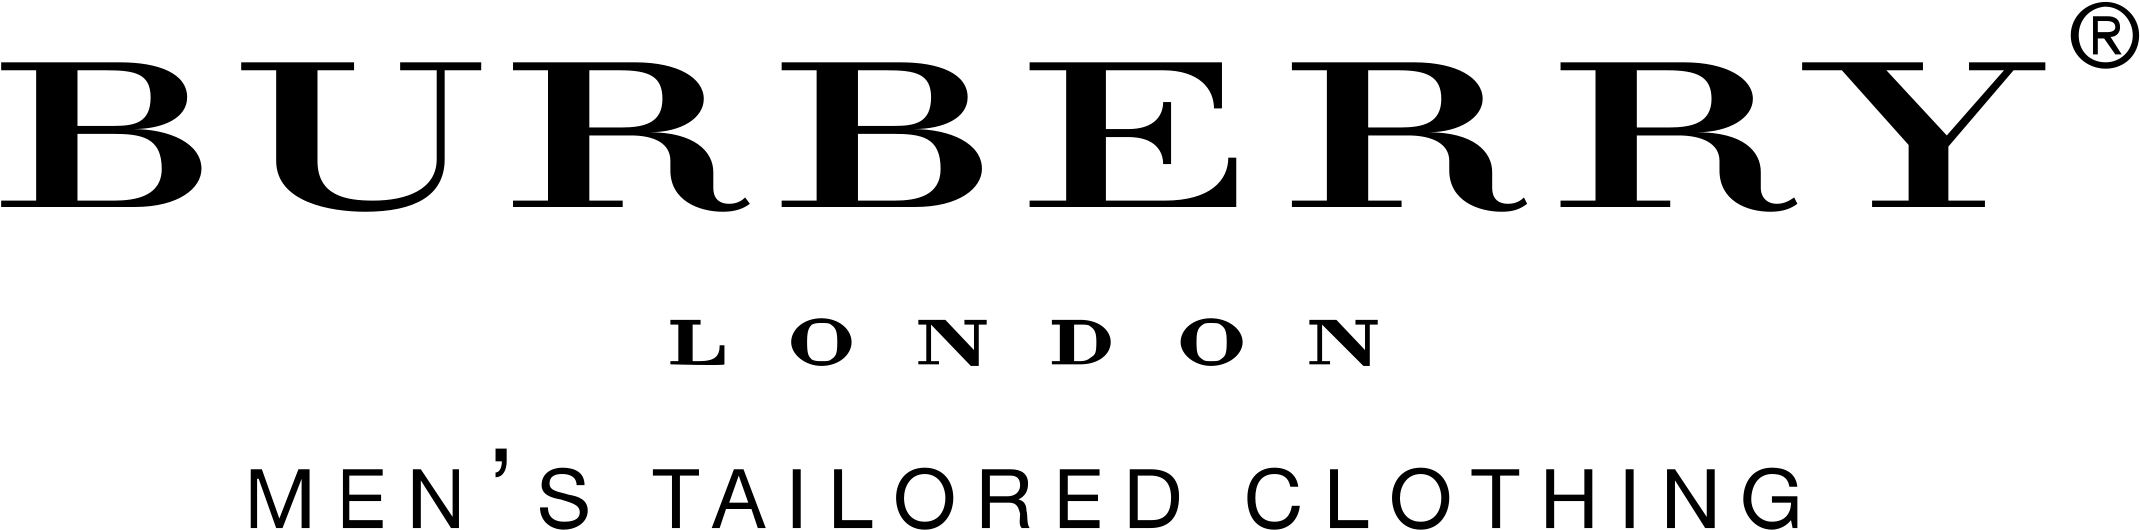 Burberry Logo PNG Hochwertiges Bild